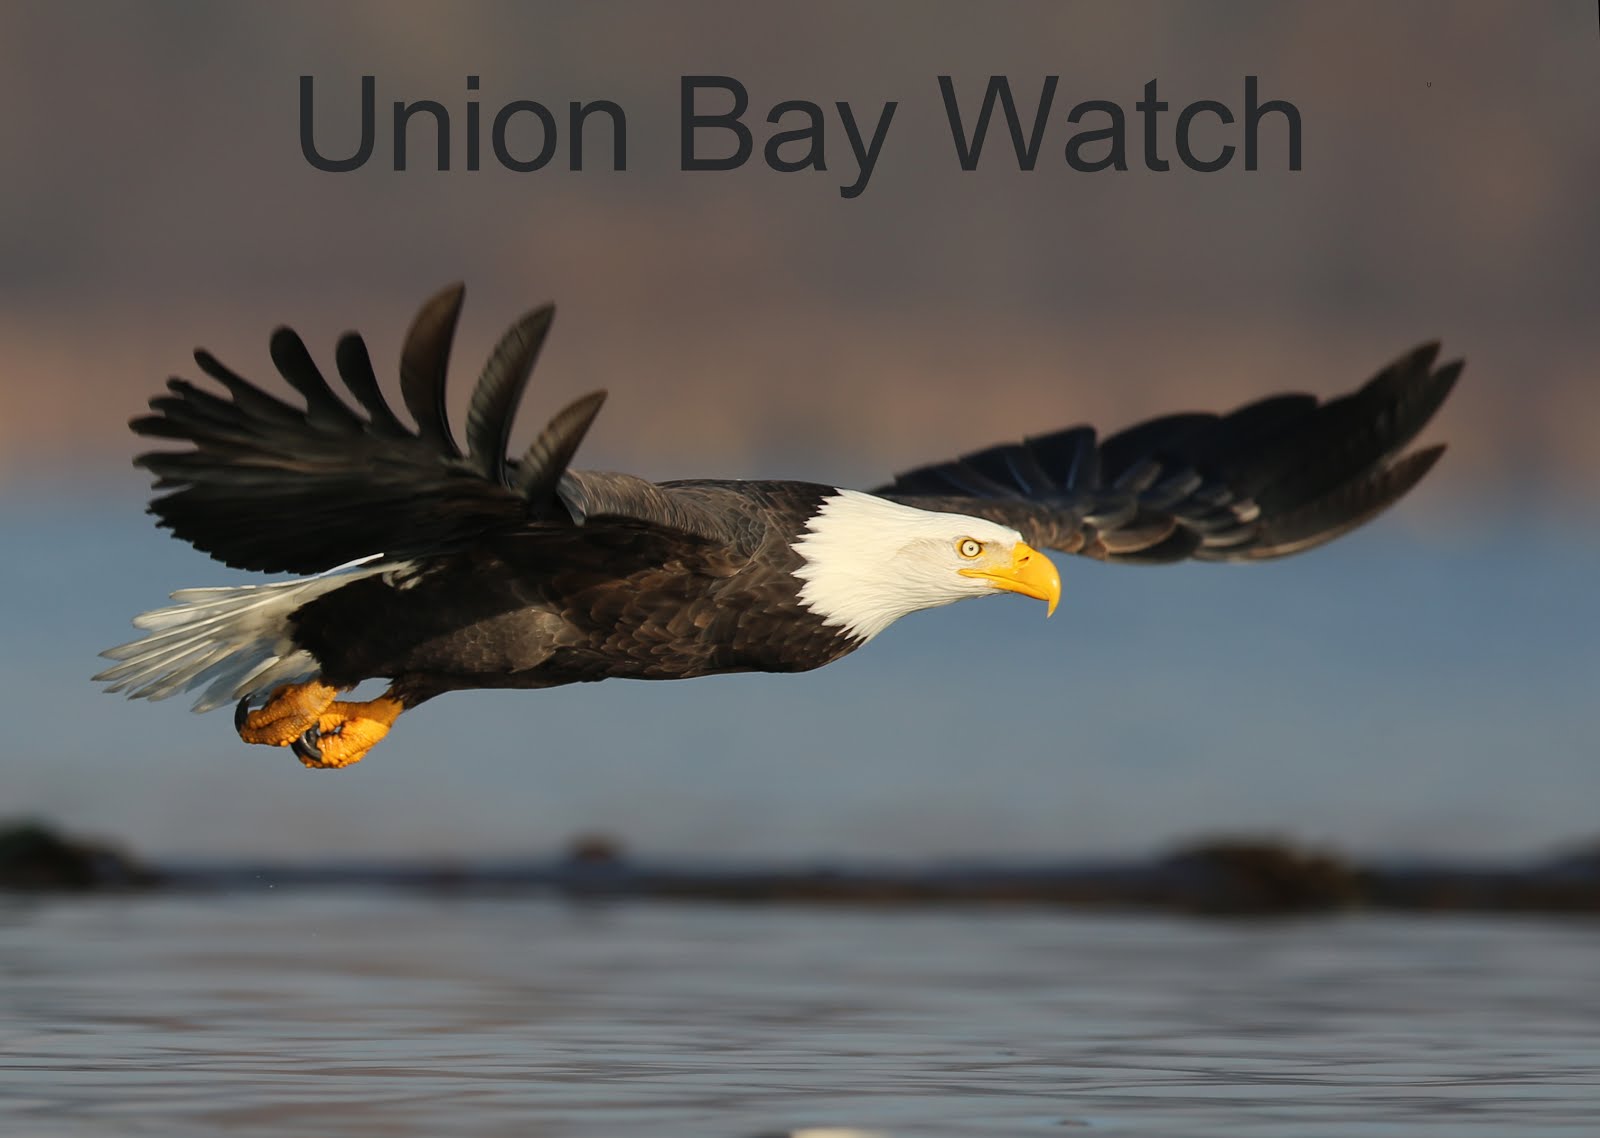  Union Bay Watch  